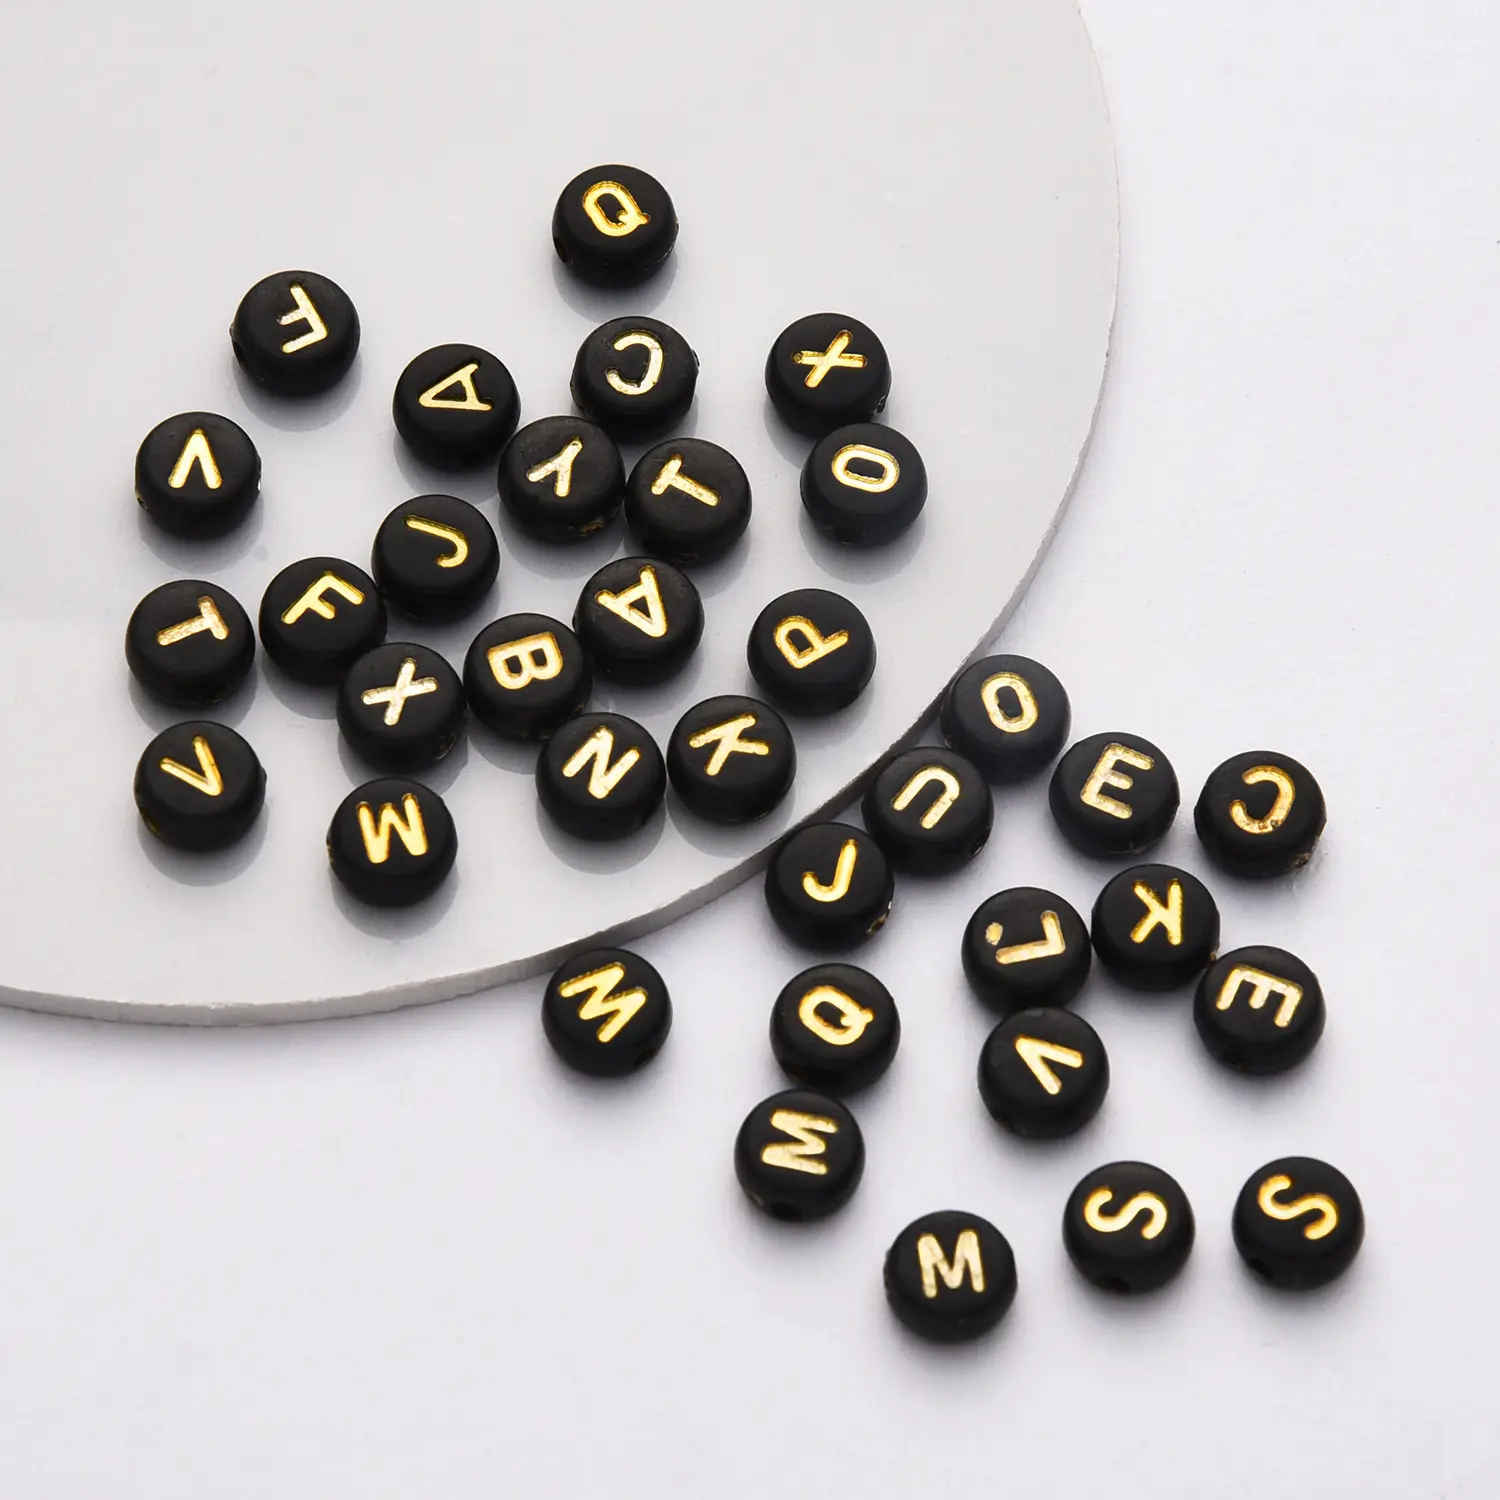 Hongzhi Wholesale Letter Beads 4*7mm Acrylic Random Black With Gold Alphabet Letter Beads ForJewelry Making Bracelets